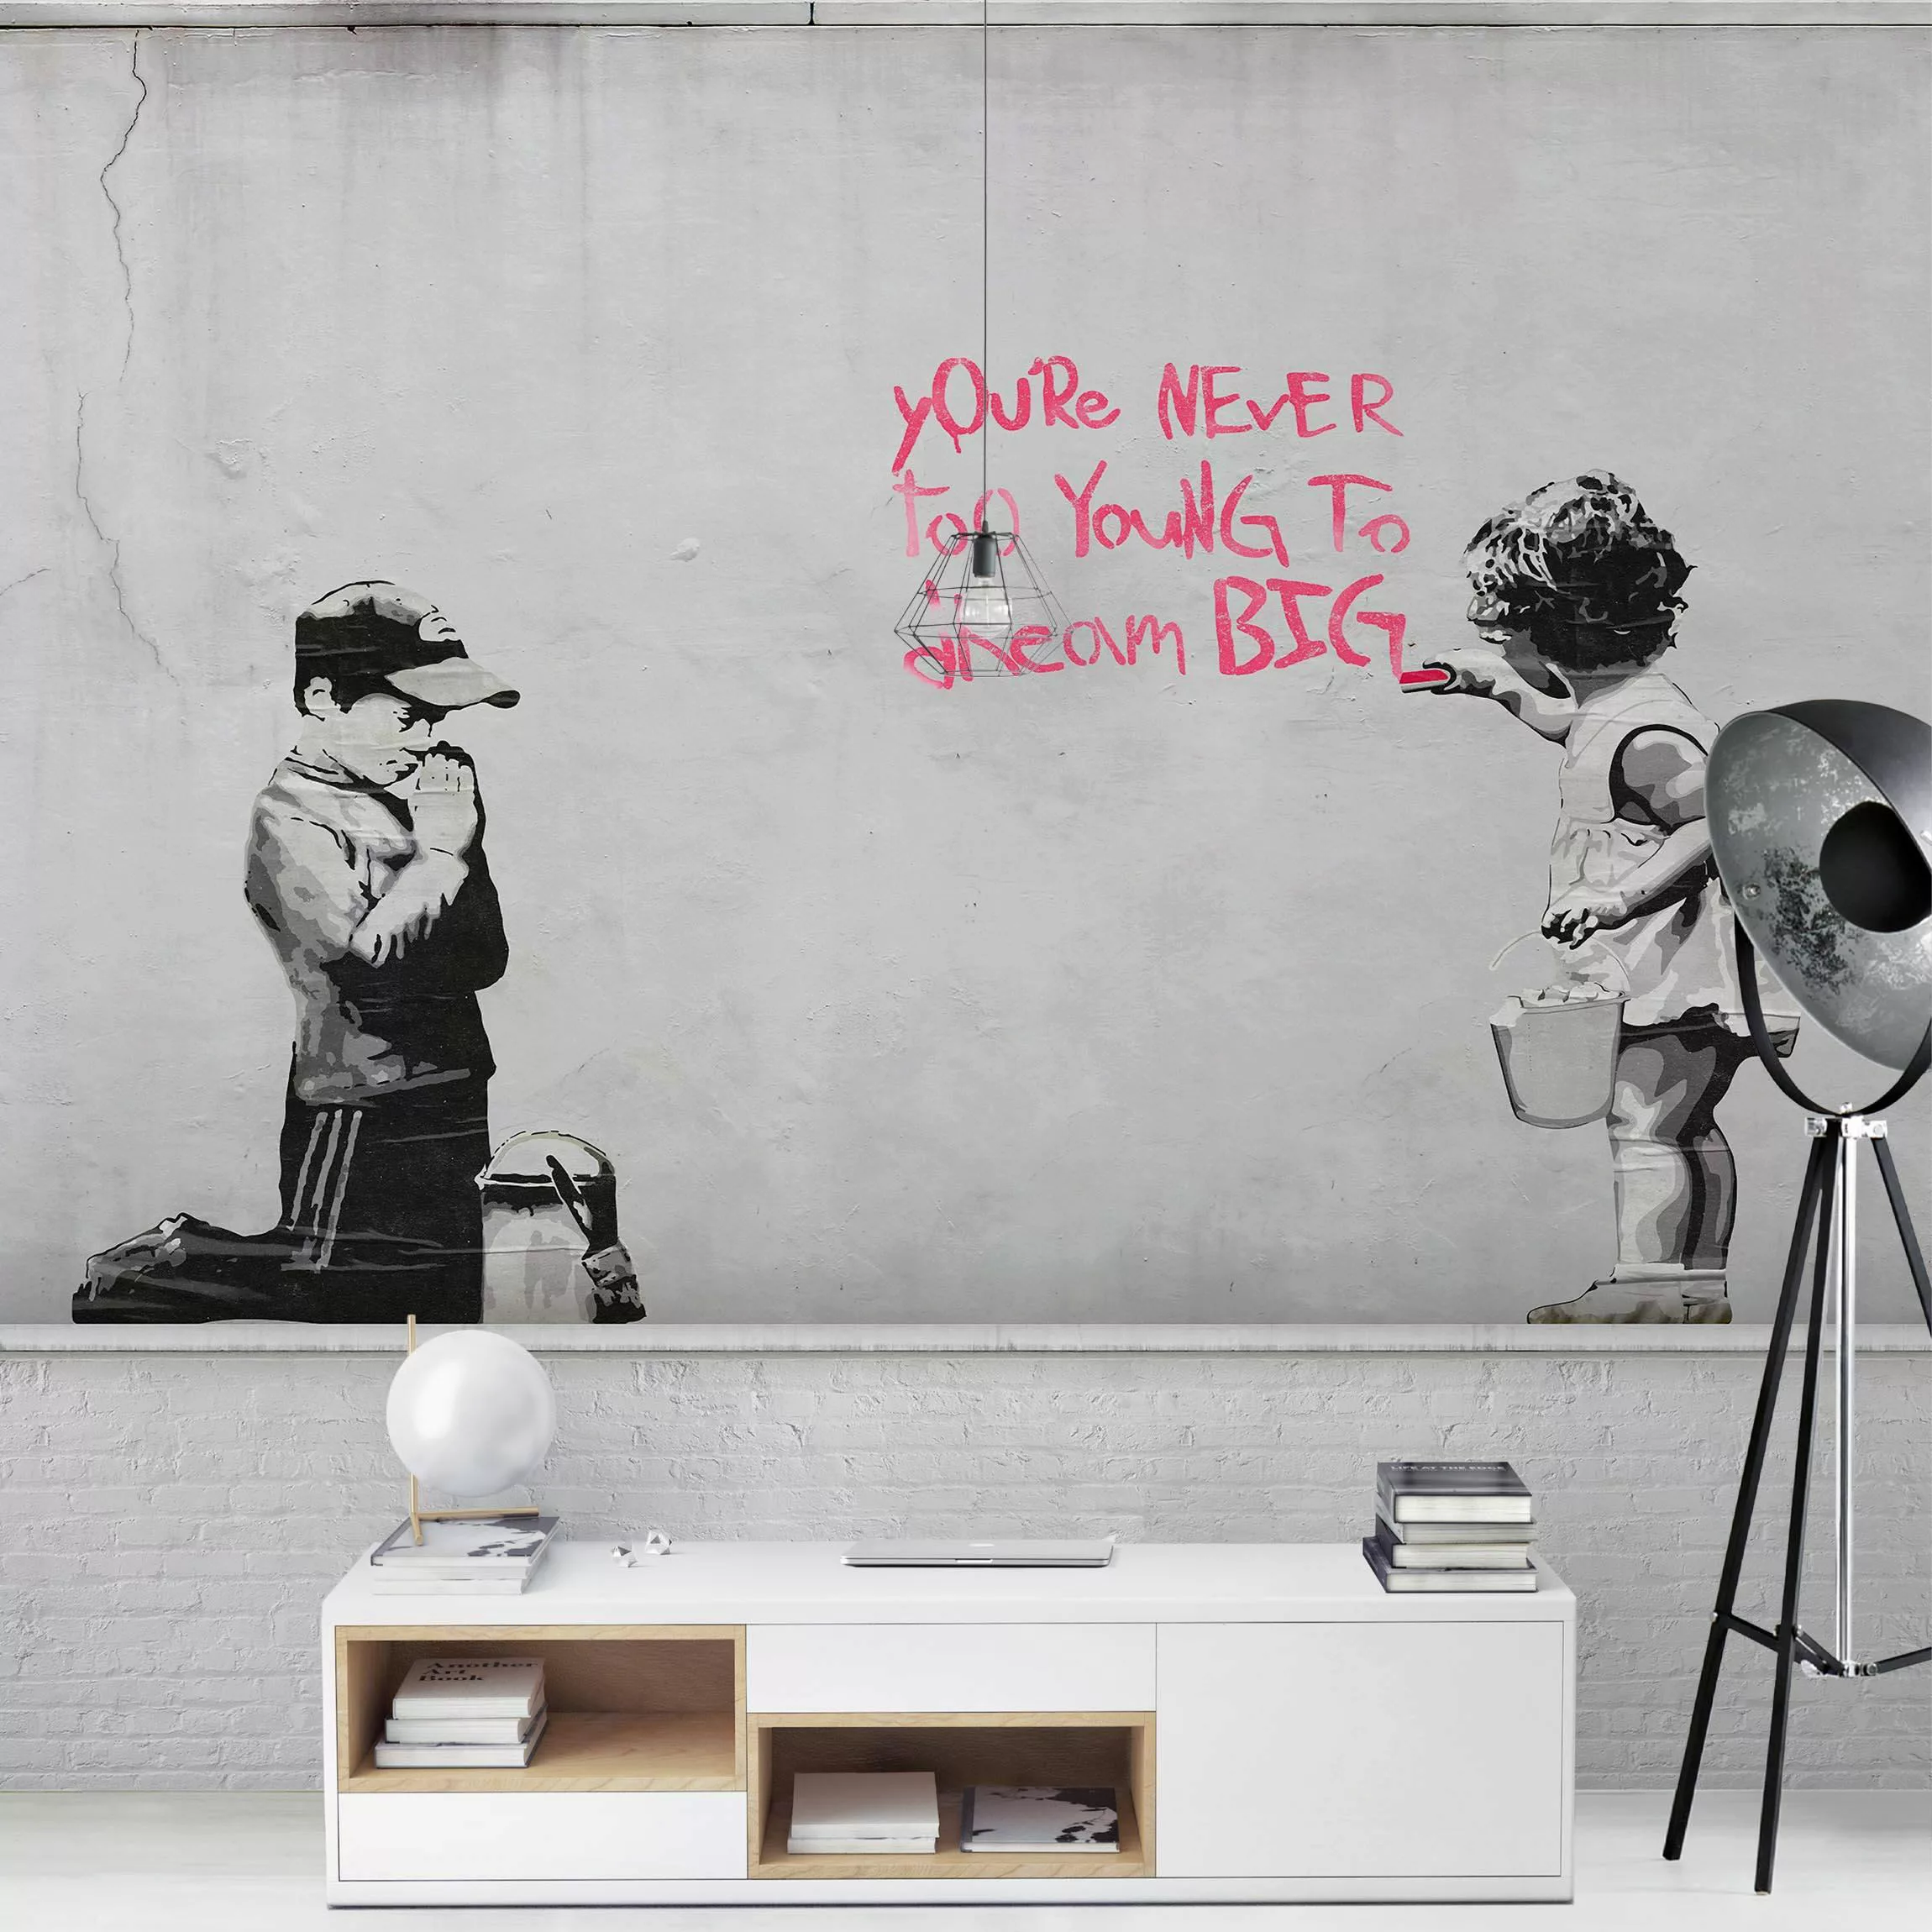 Fototapete Dream Big - Brandalised ft. Graffiti by Banksy günstig online kaufen